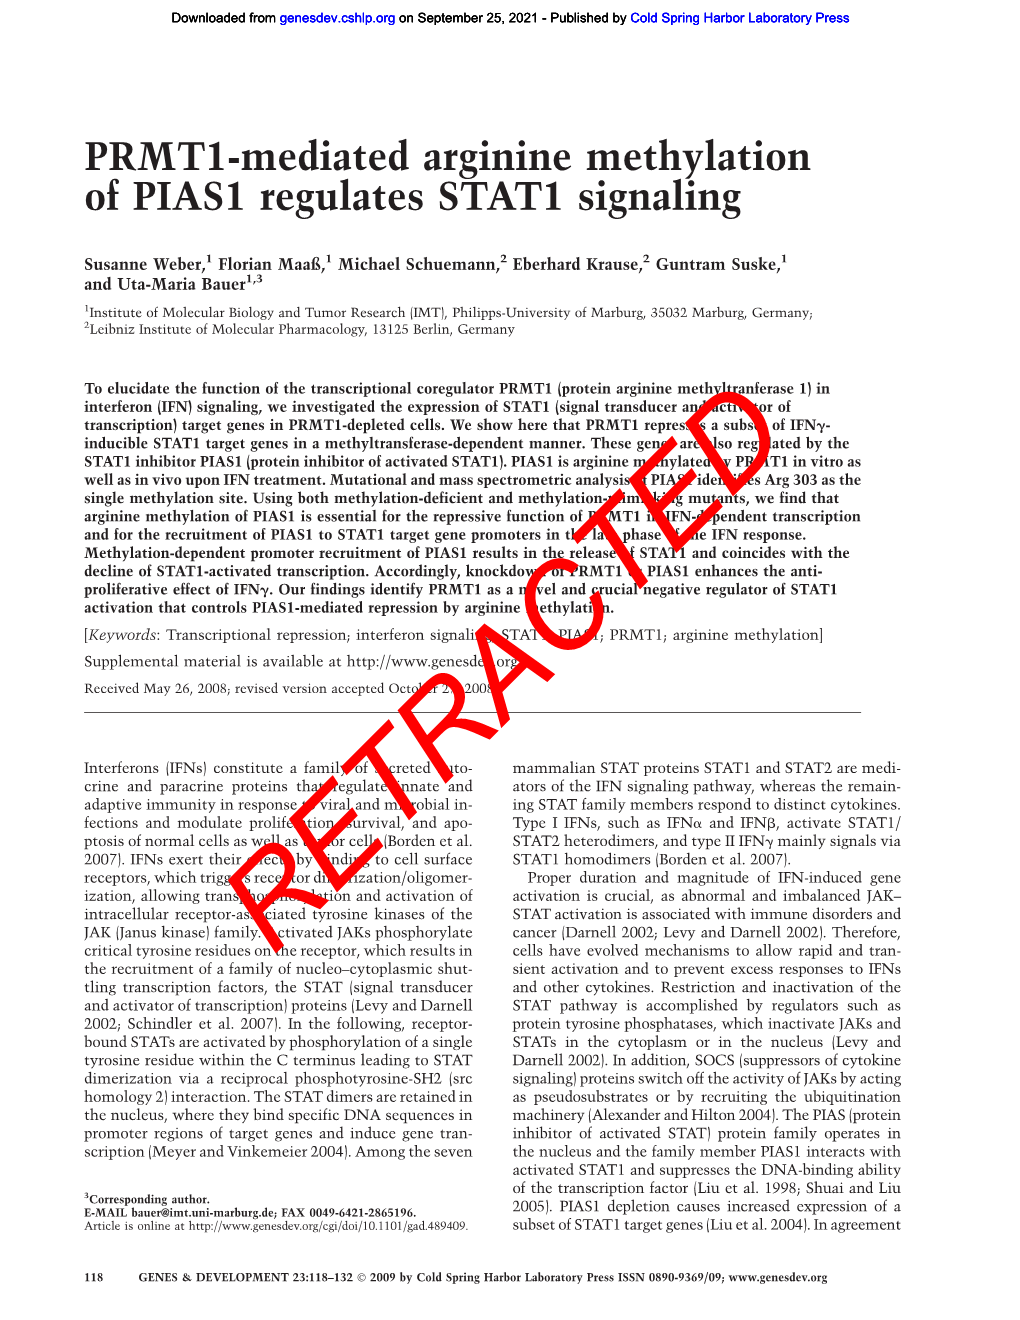 PRMT1-Mediated Arginine Methylation of PIAS1 Regulates STAT1 Signaling